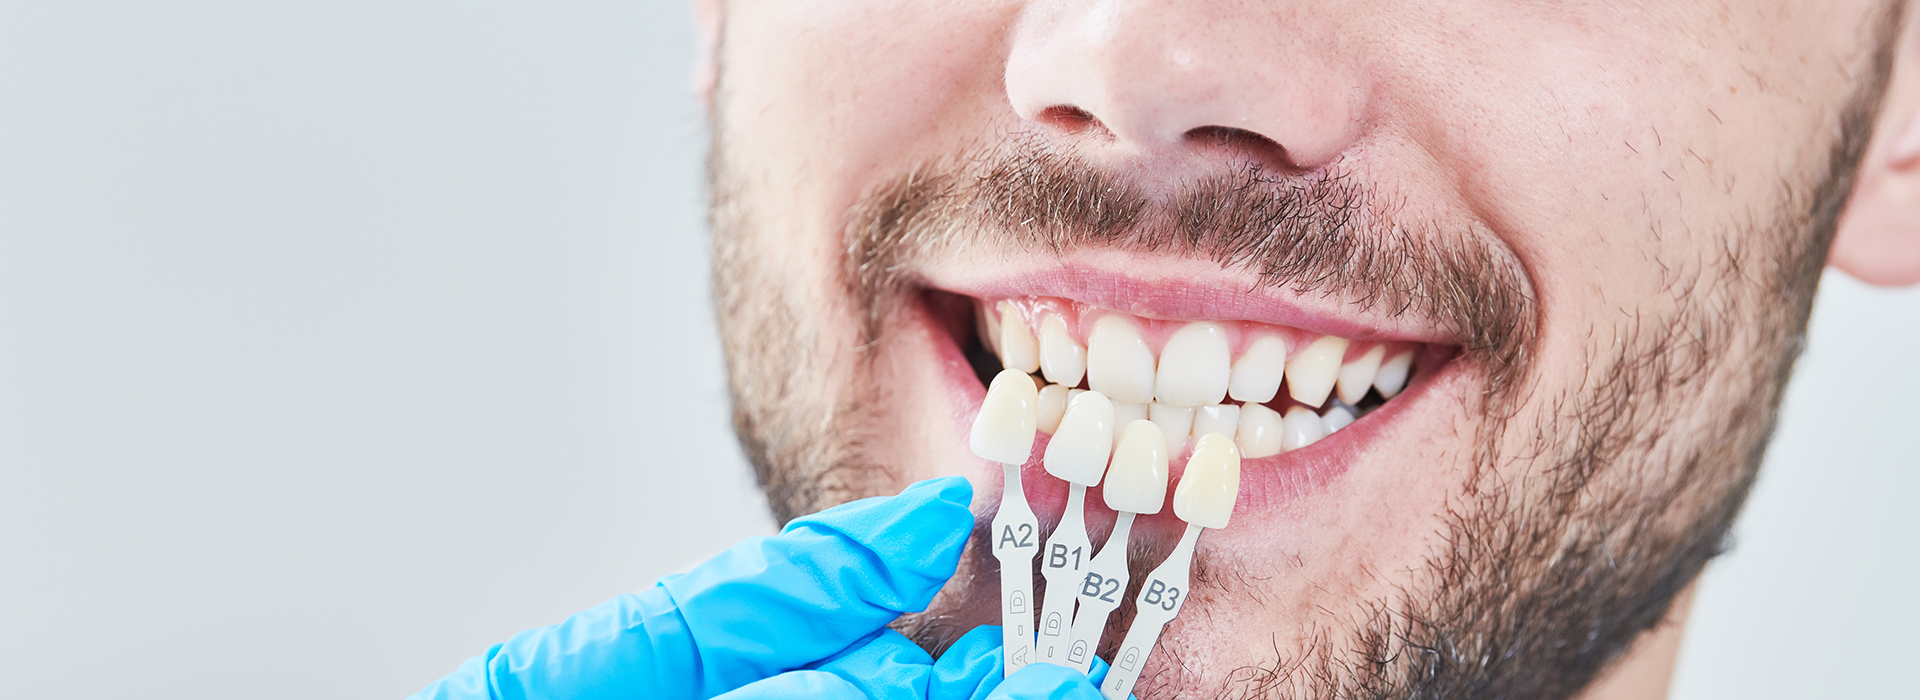 NoblePro Dental | ZOOM  Whitening, Sedation Dentistry and All-on-4 reg 